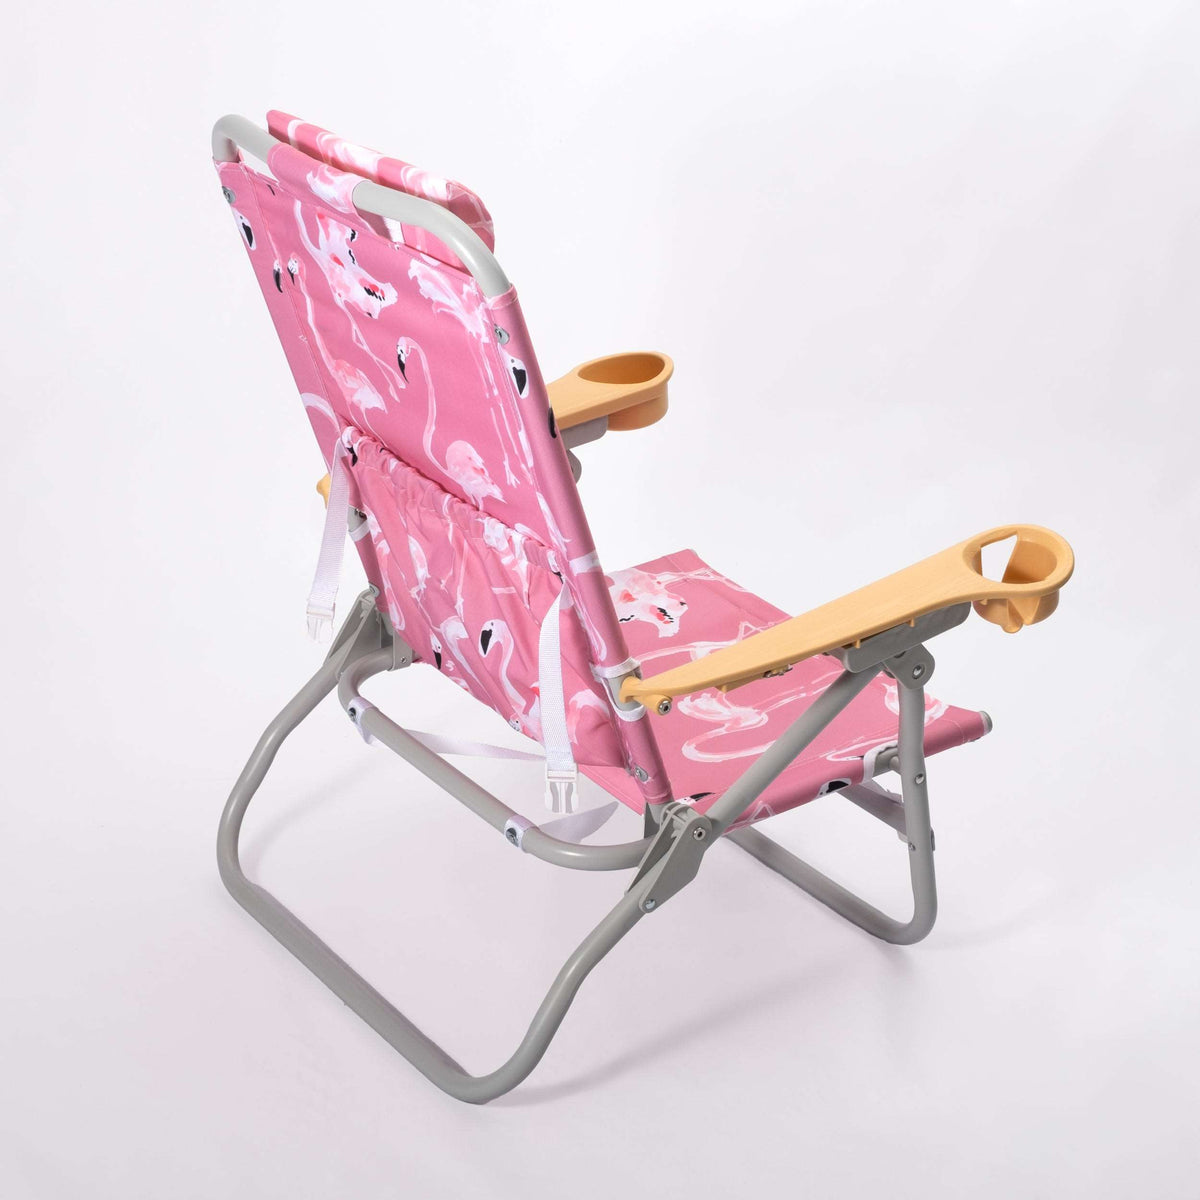 Beach LowTides Evelyn Henson – Chair Products Flamingo Sandbar Low in Ocean